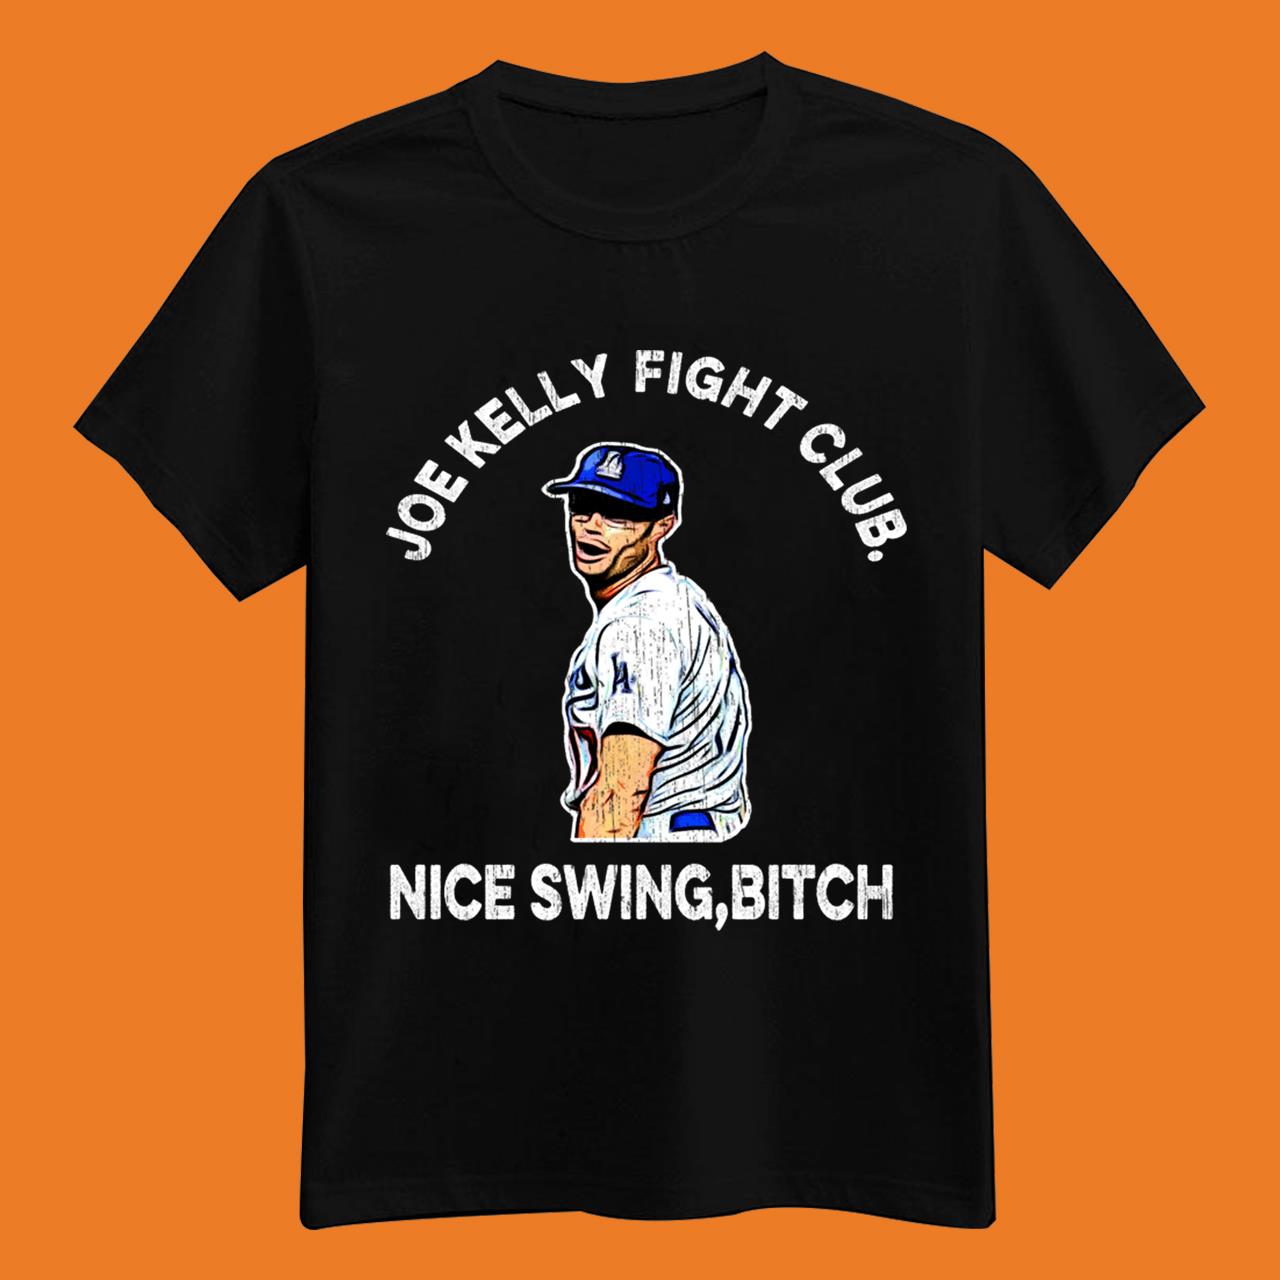 Joe Kelly Fight Club – Nice Swing Bitch T-Shirt